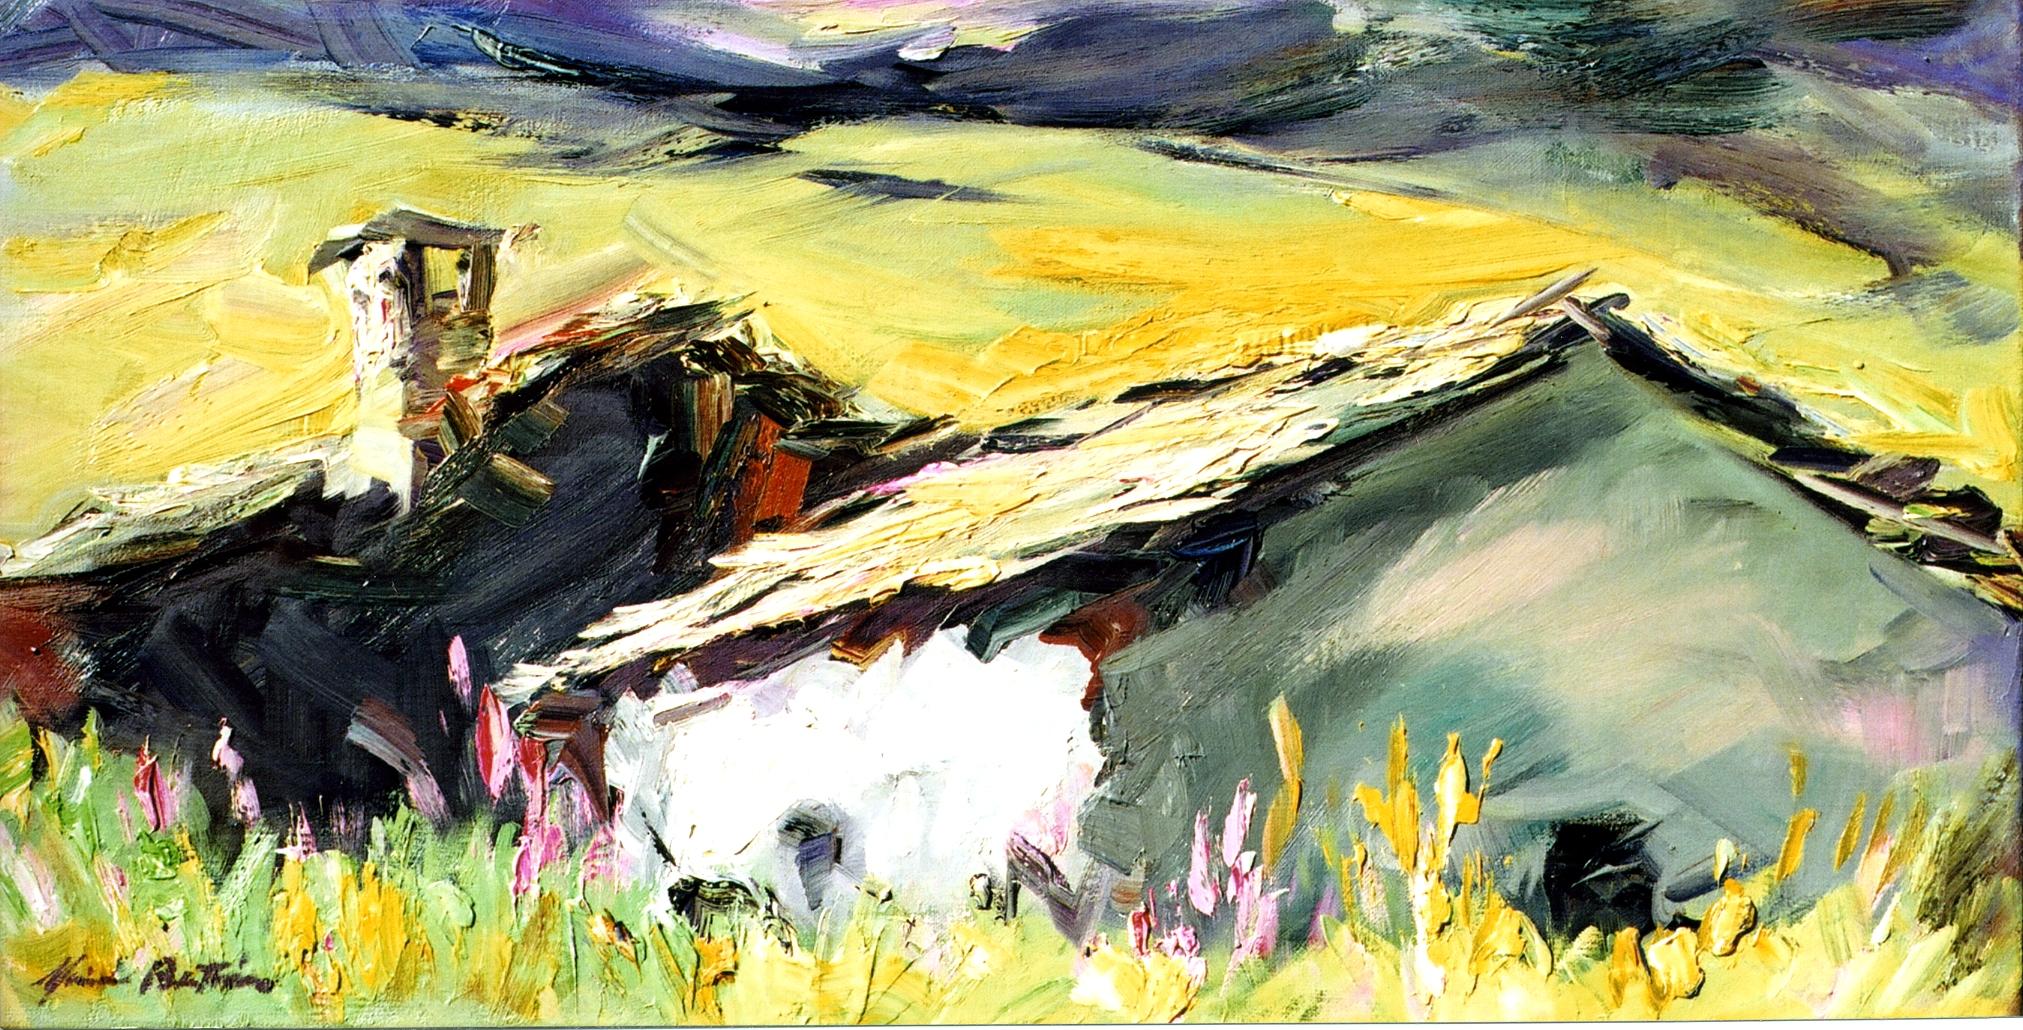 Maria Bertrán Landscape Painting - "Golden Alpine Cabins" Contemporary Impressionist Oil of Italian Alps 